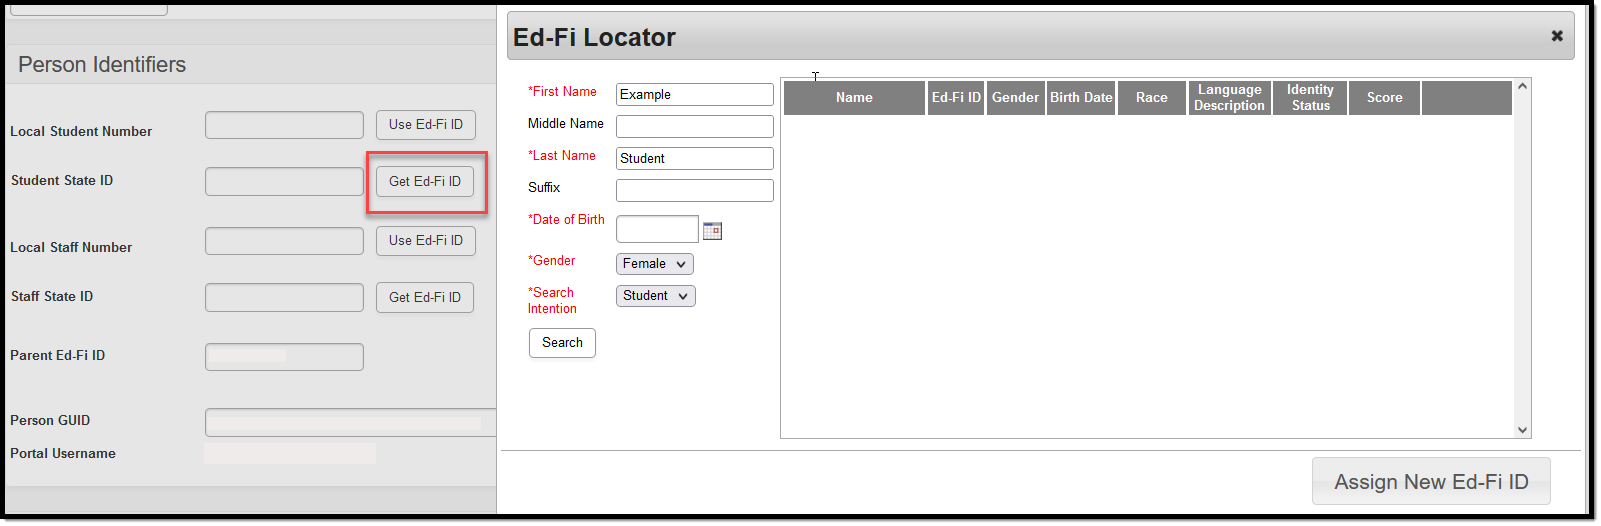 Image of Ed-Fi Locator tool for Indiana.